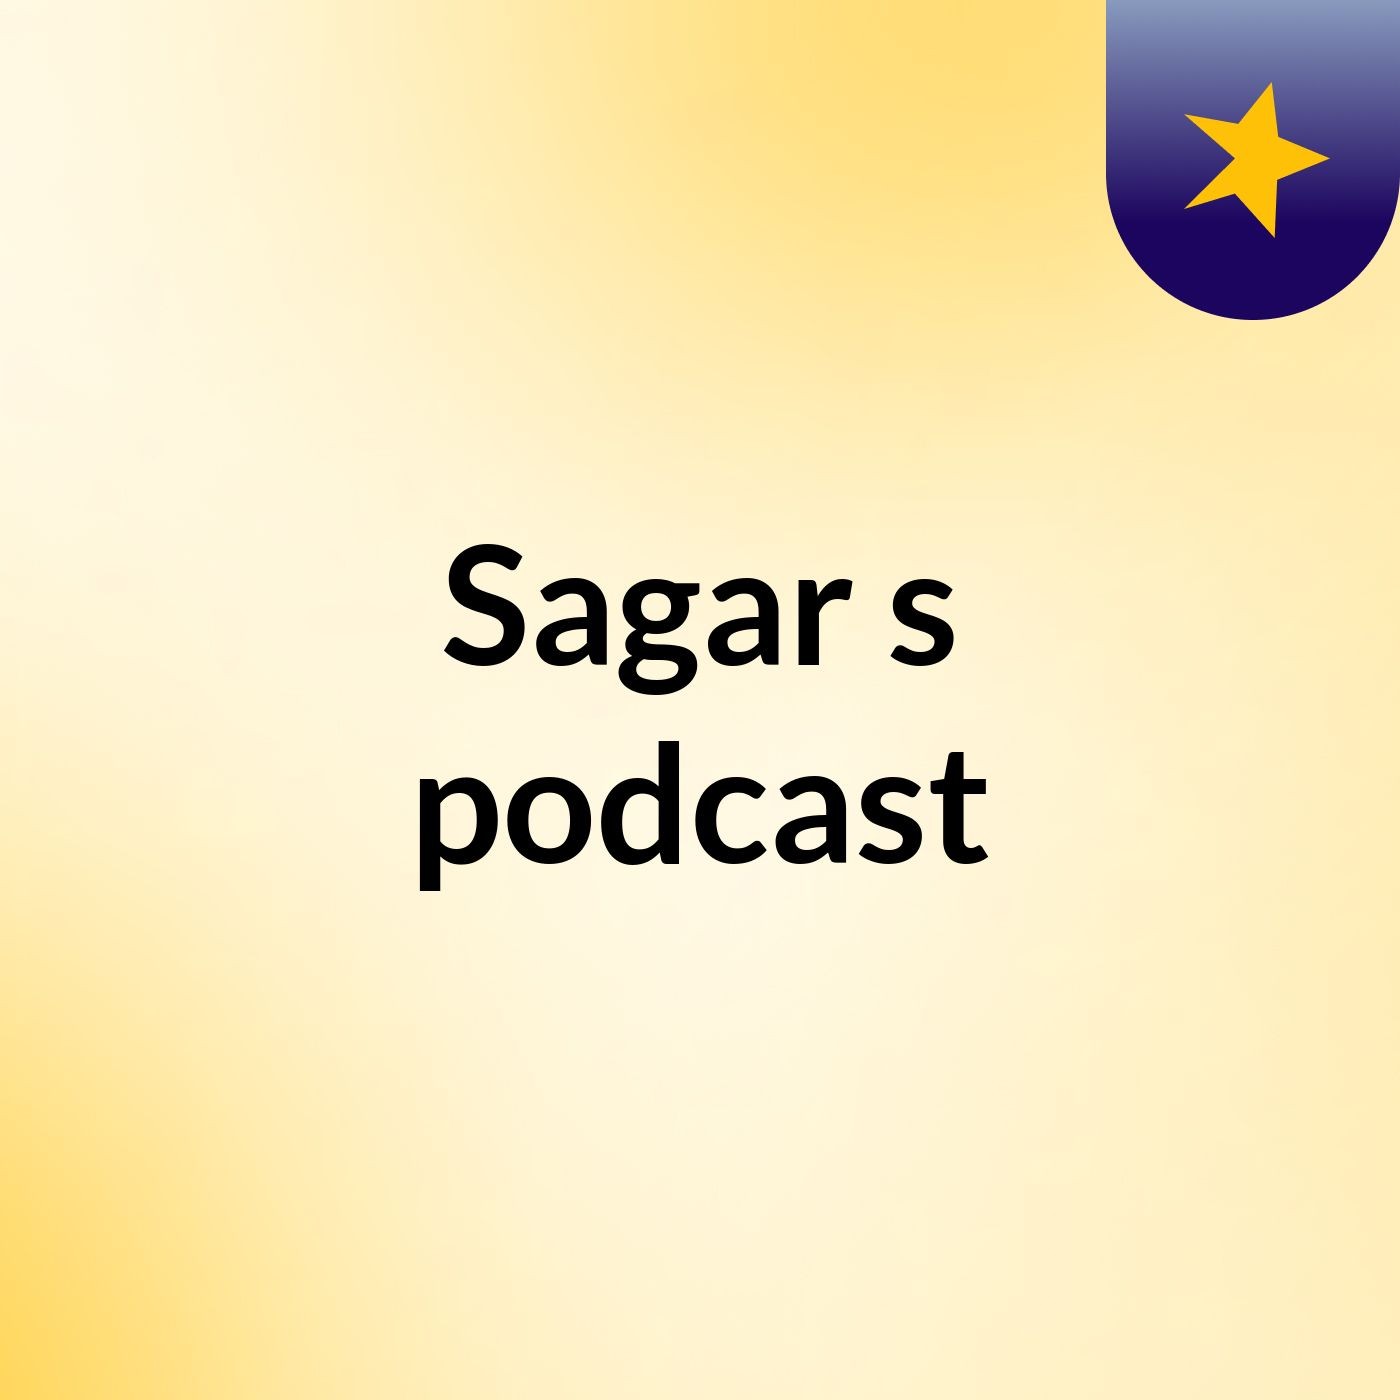 Episode 10 - Sagar's podcast